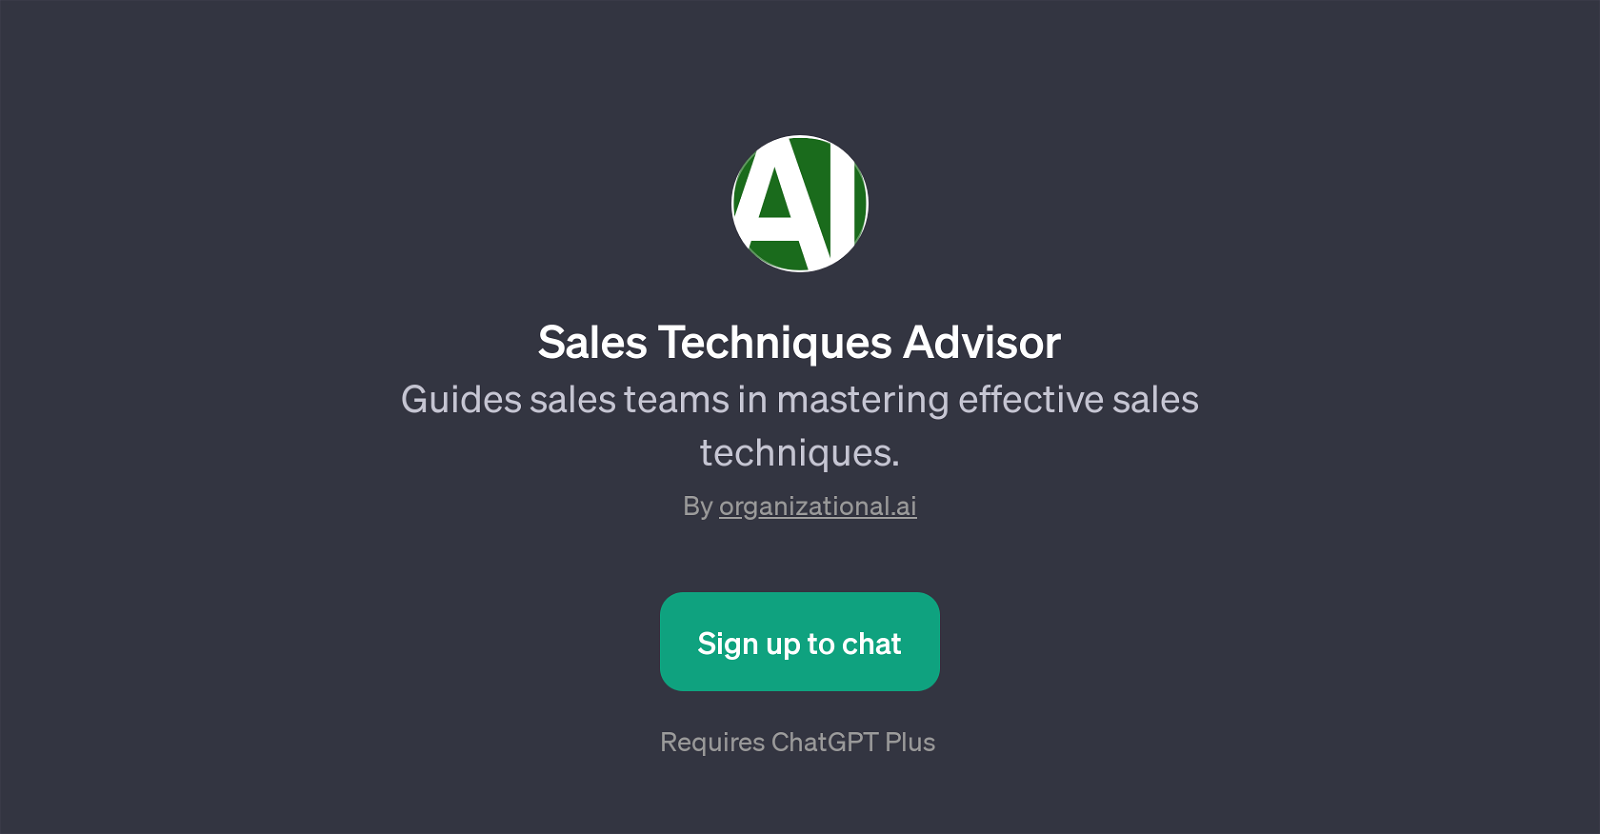 Sales Techniques Advisor website